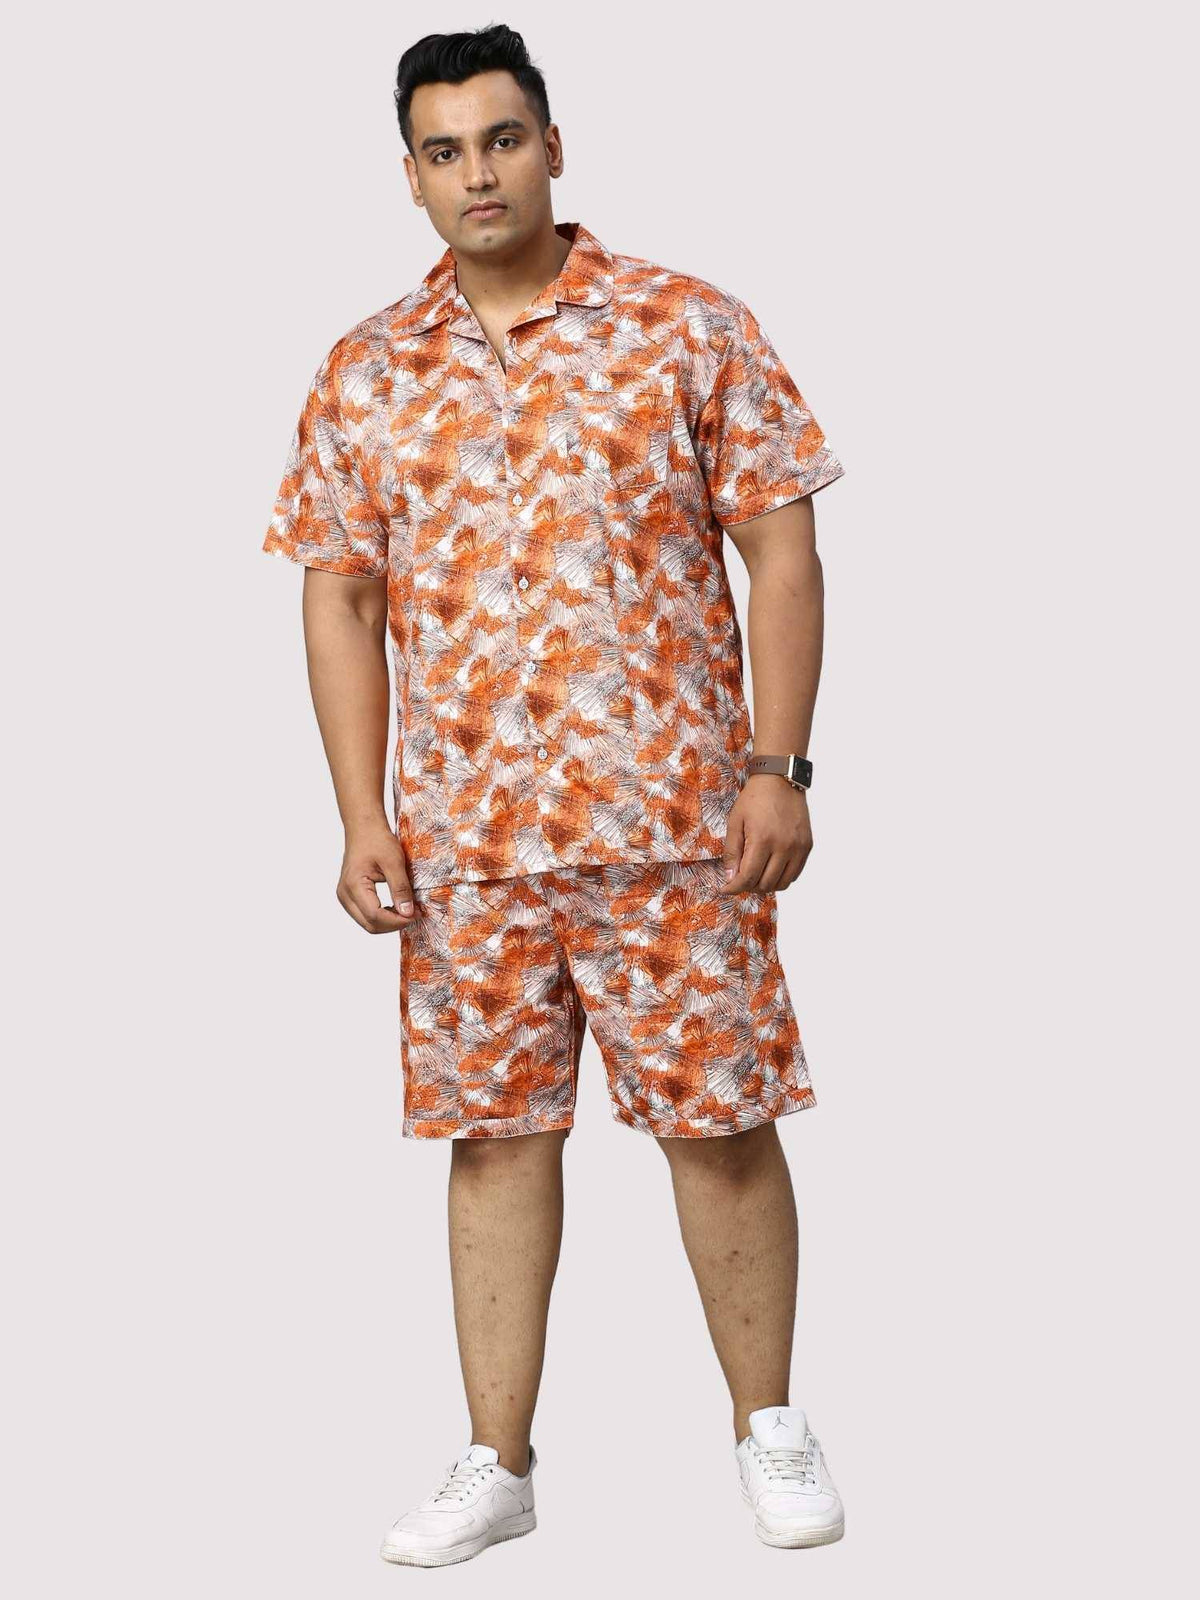 Sunrise Orange Digital Printed Half Co-Ords Men's Plus Size - Guniaa Fashions